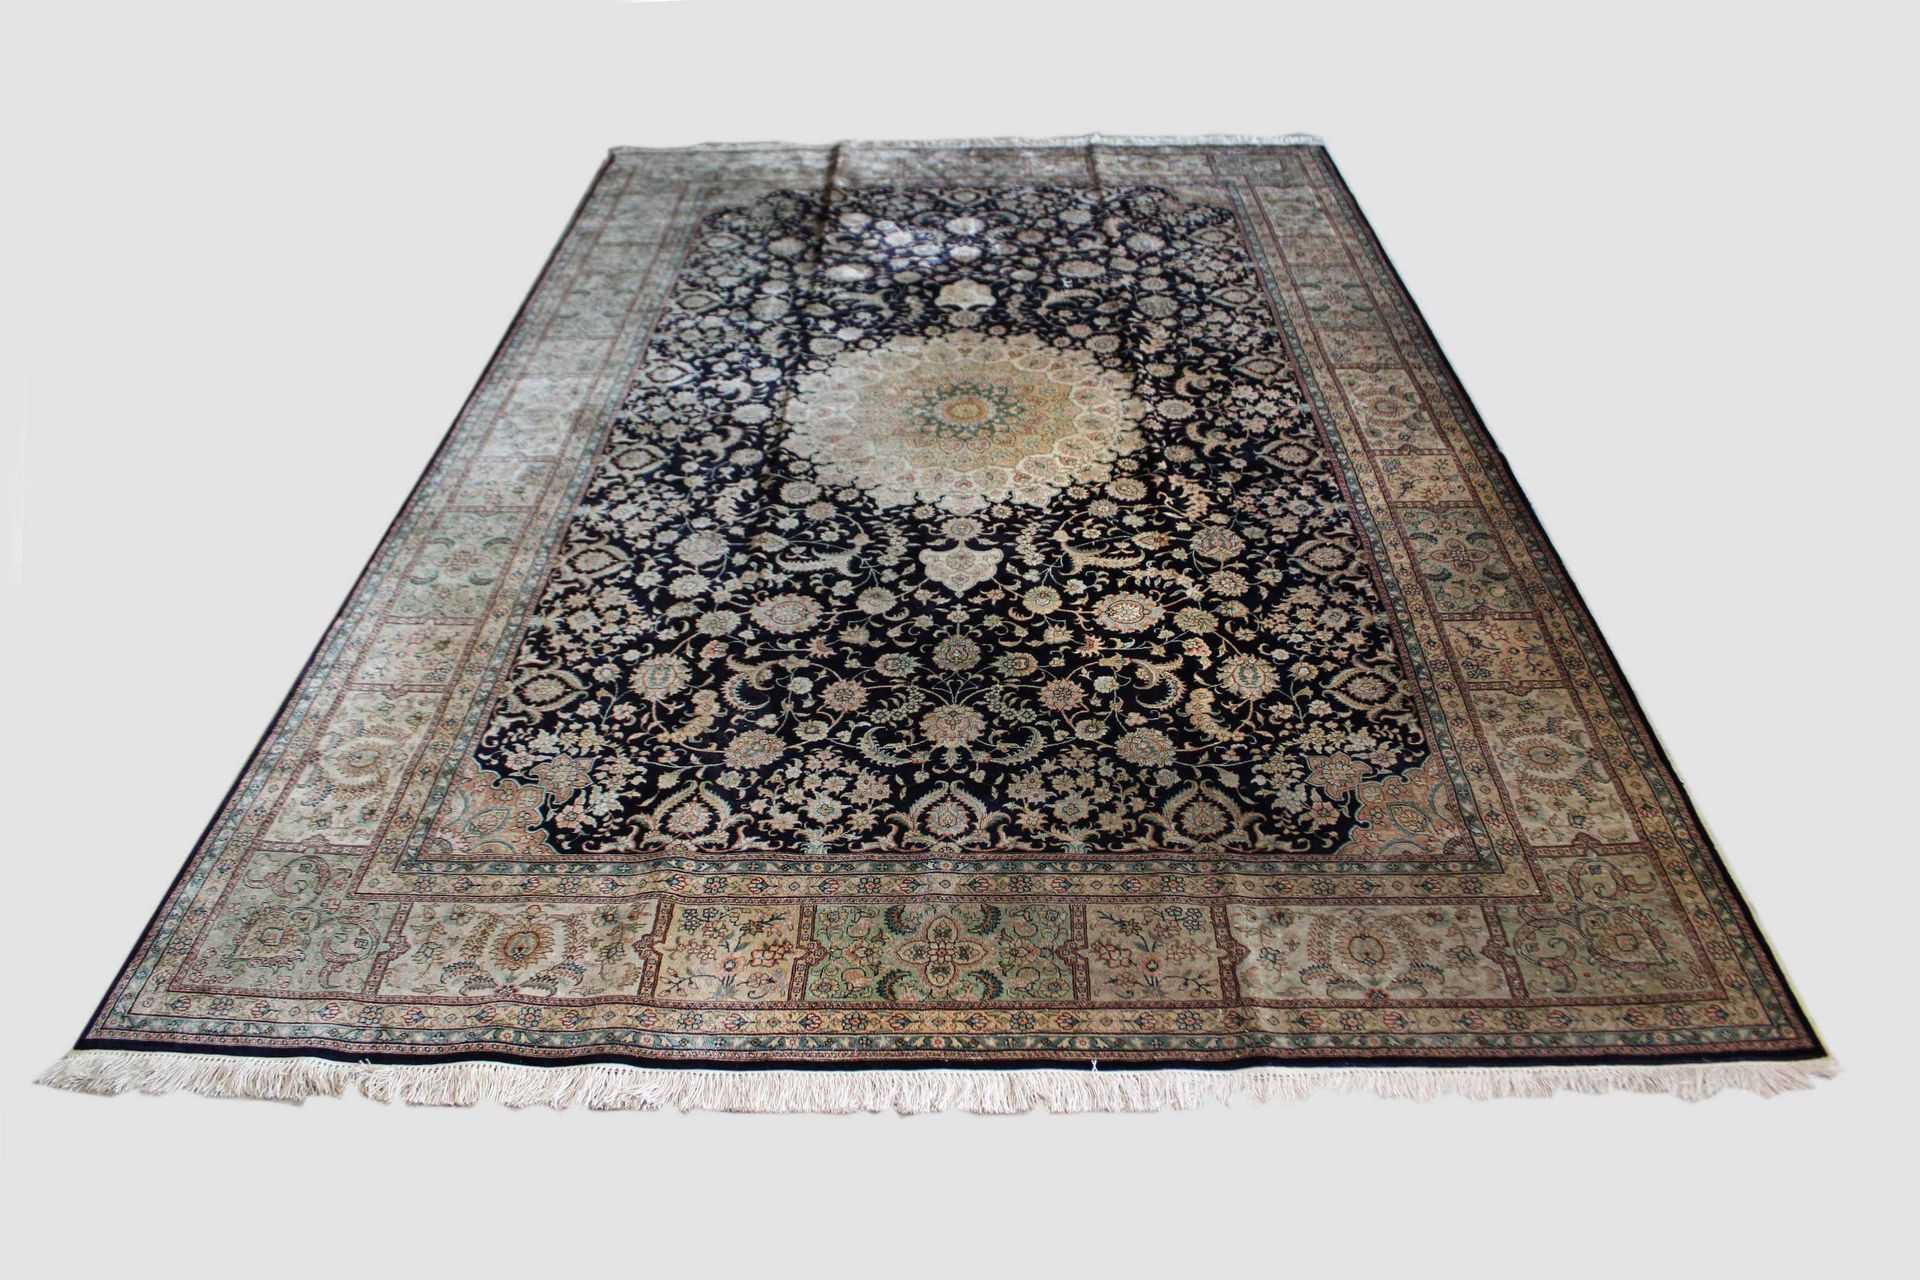 Teppich, China Tapis, Chine, soie. Dimensions : 185 x 283 cm.